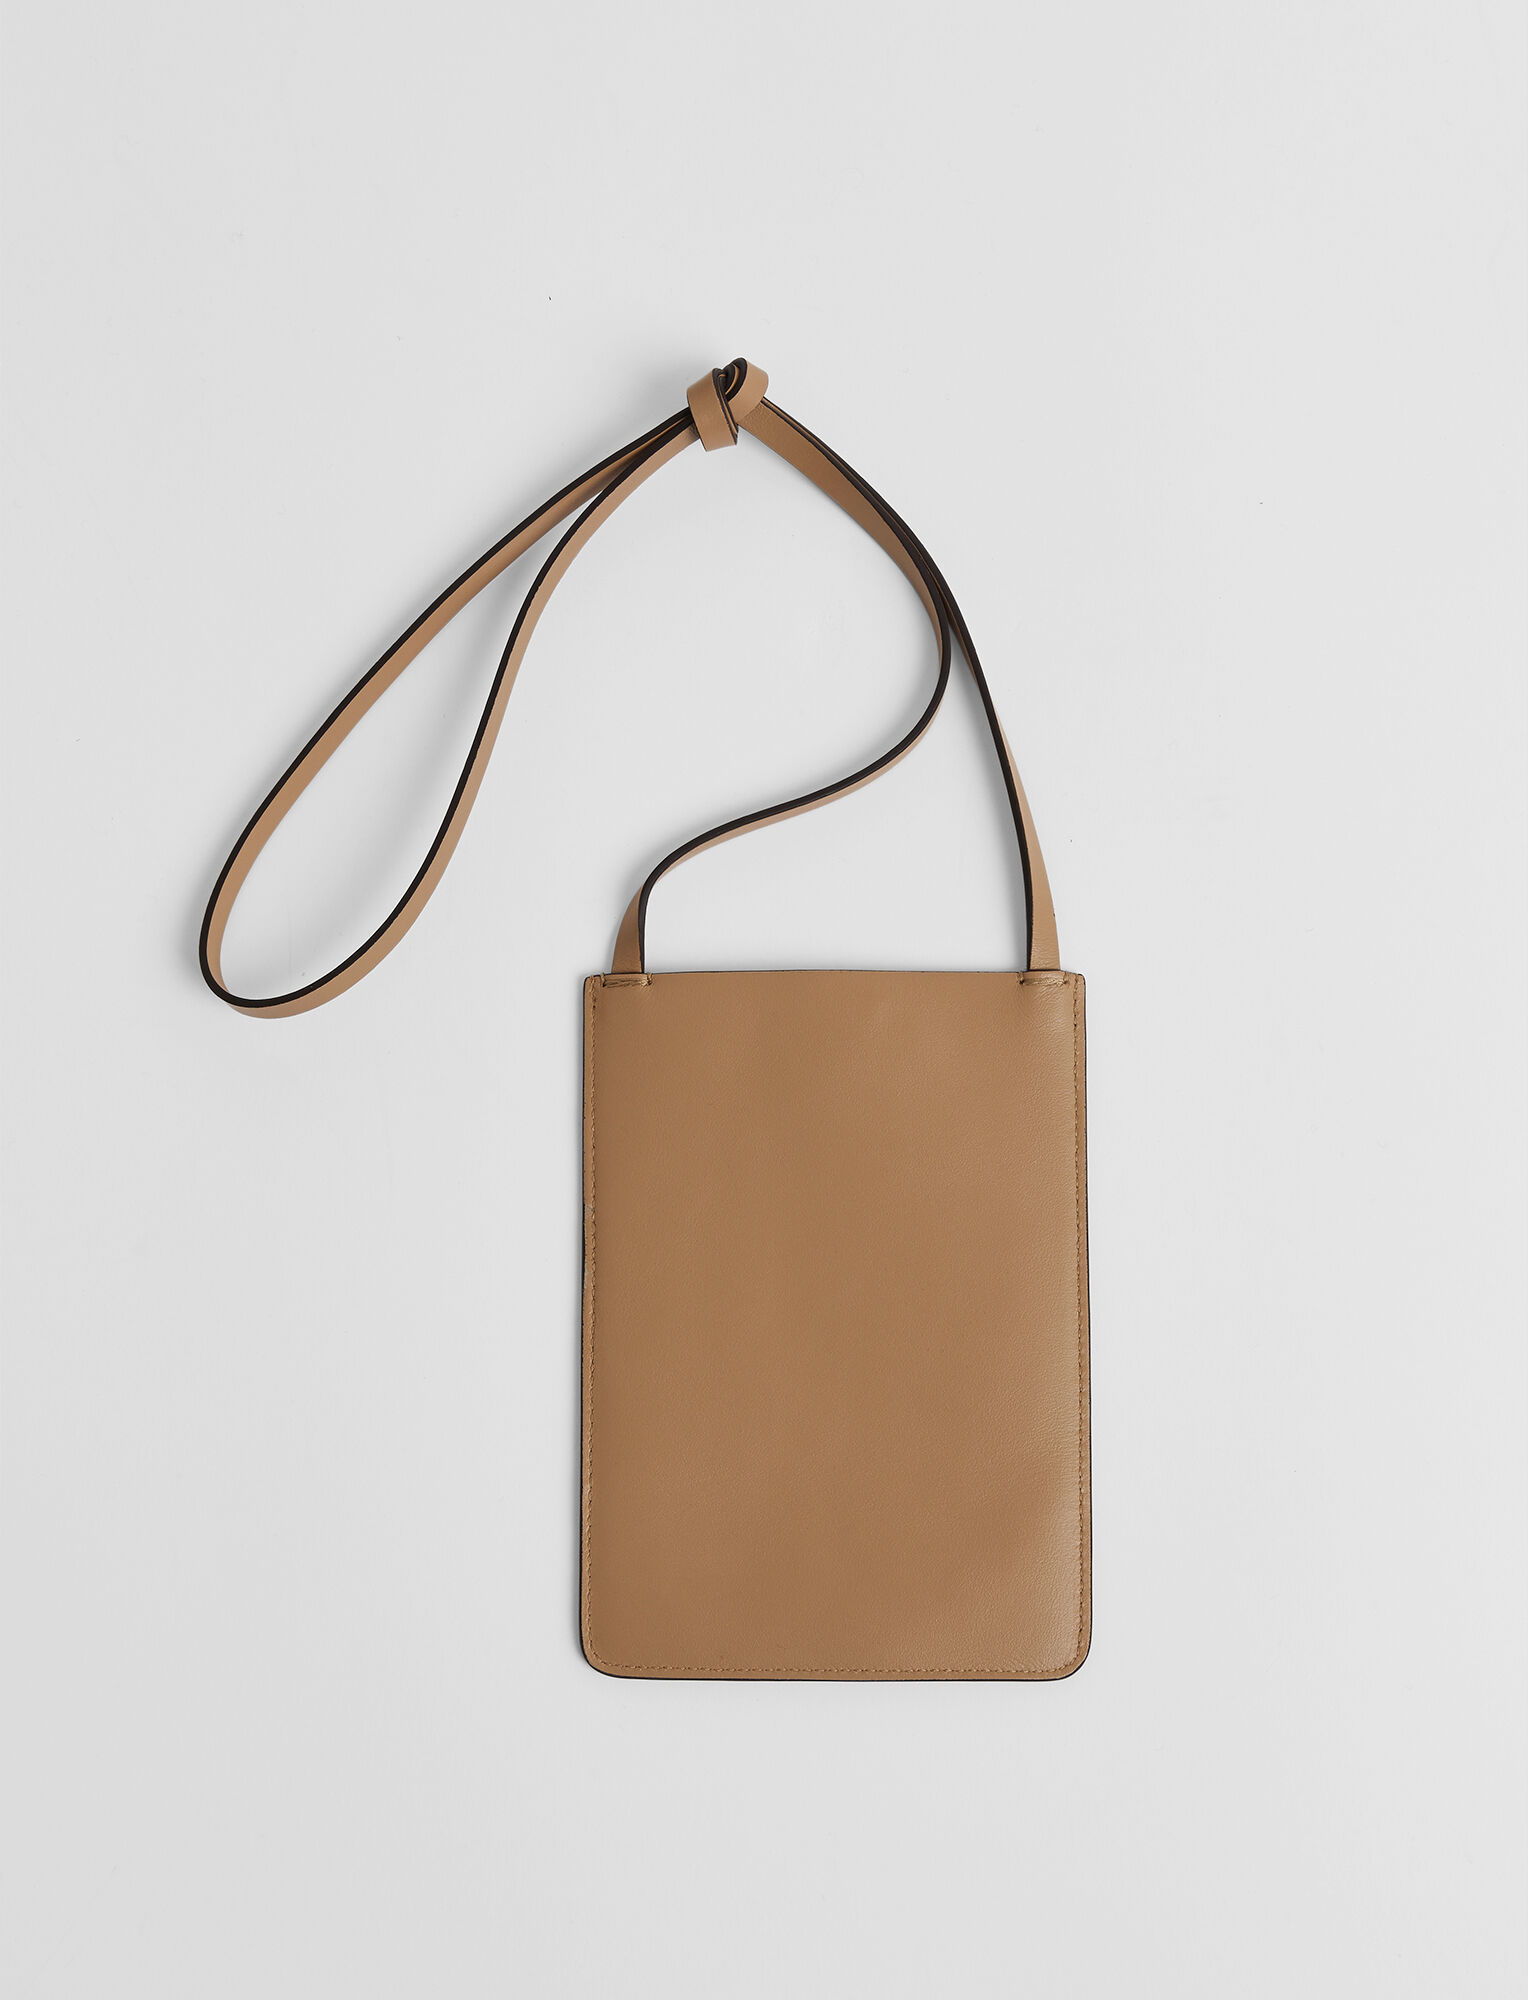 Joseph, Leather Pocket Bag, in Almond